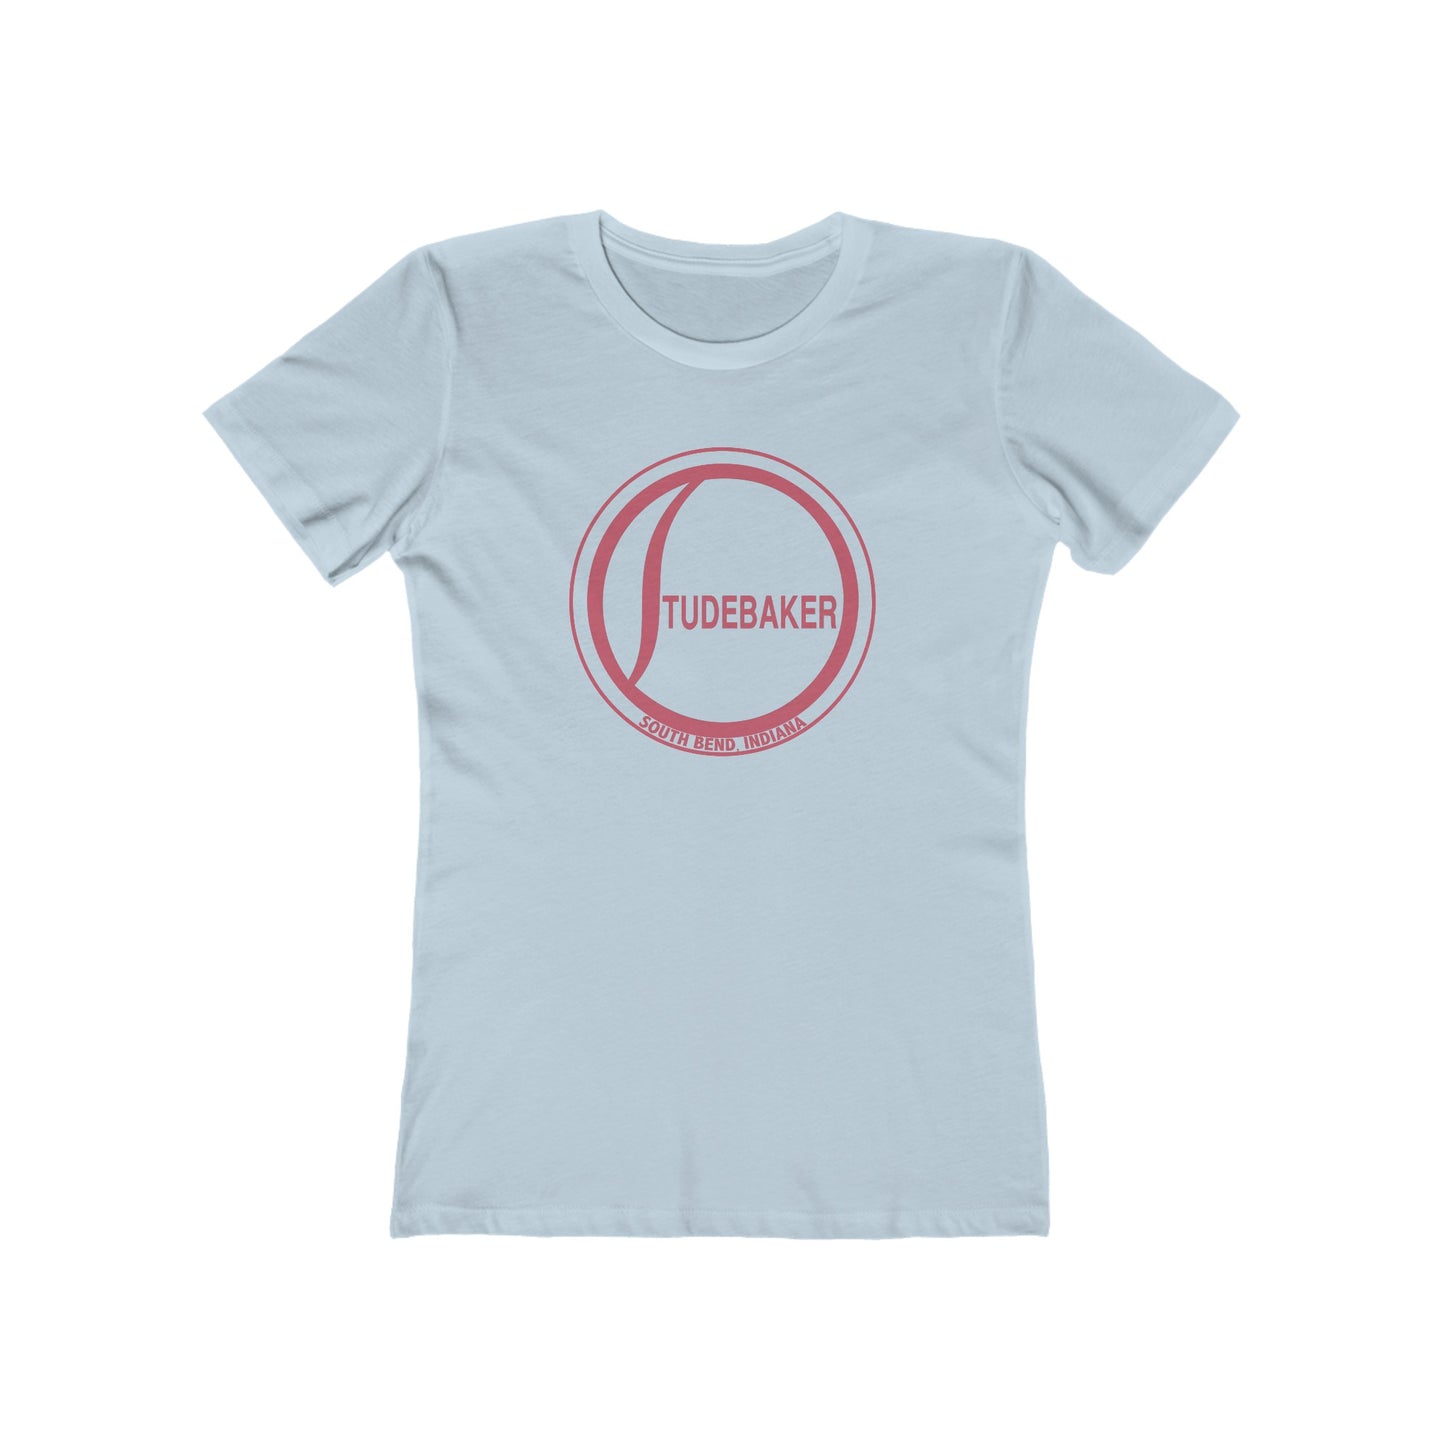 Studebaker - South Bend Classic Car - Women's T-shirt